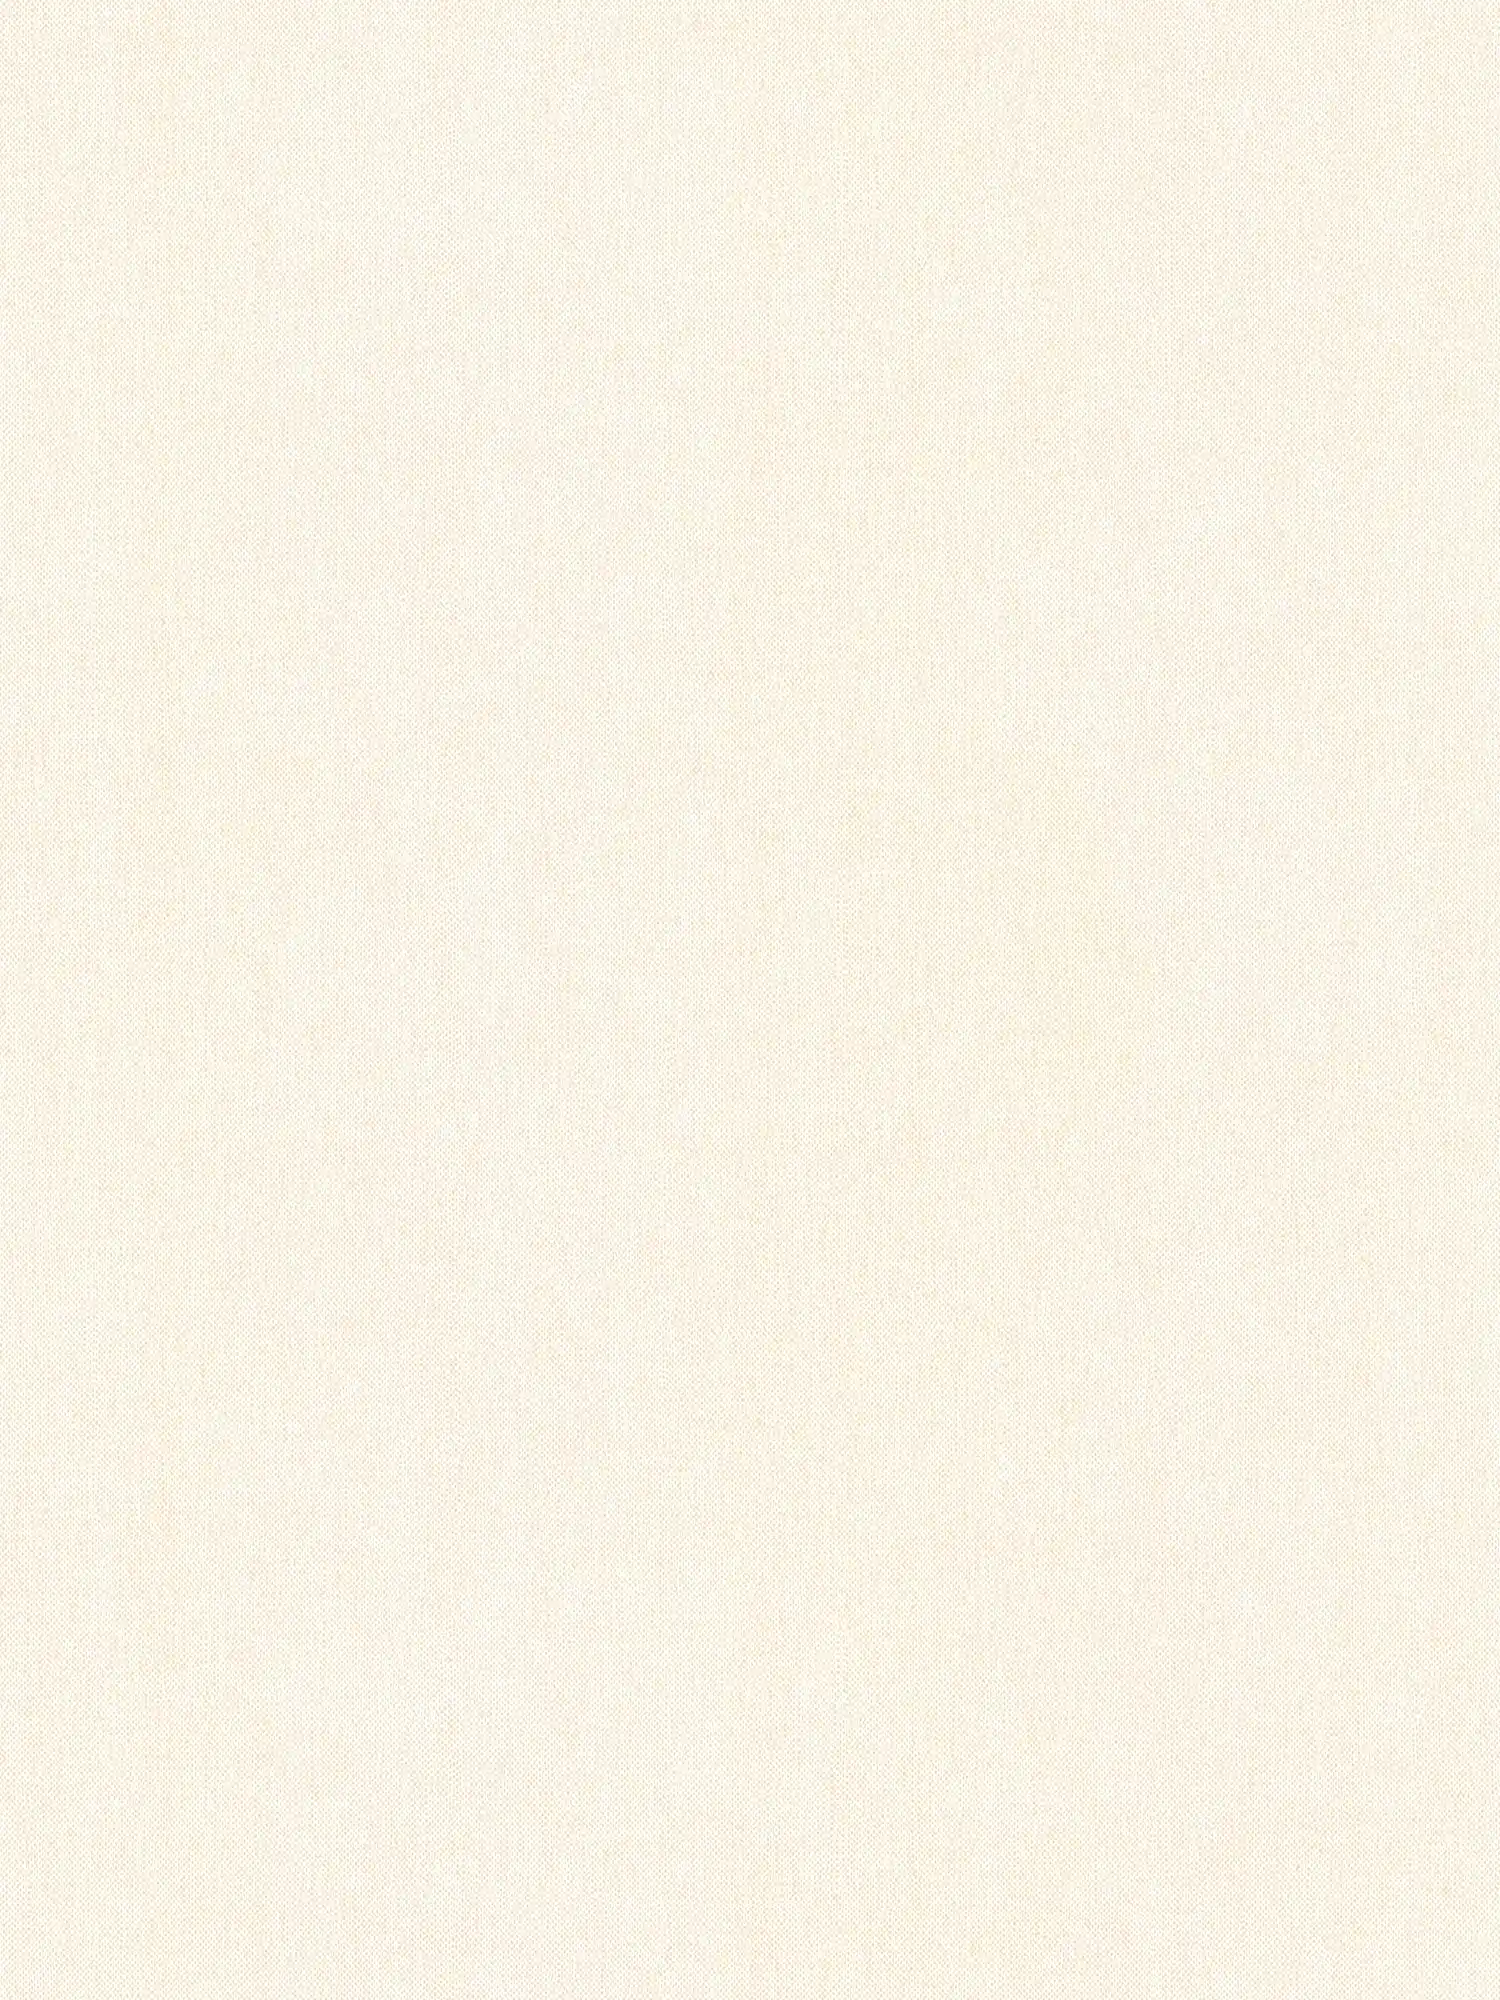 Carta da parati vintage bianca e opaca con struttura tessile - bianco, crema
